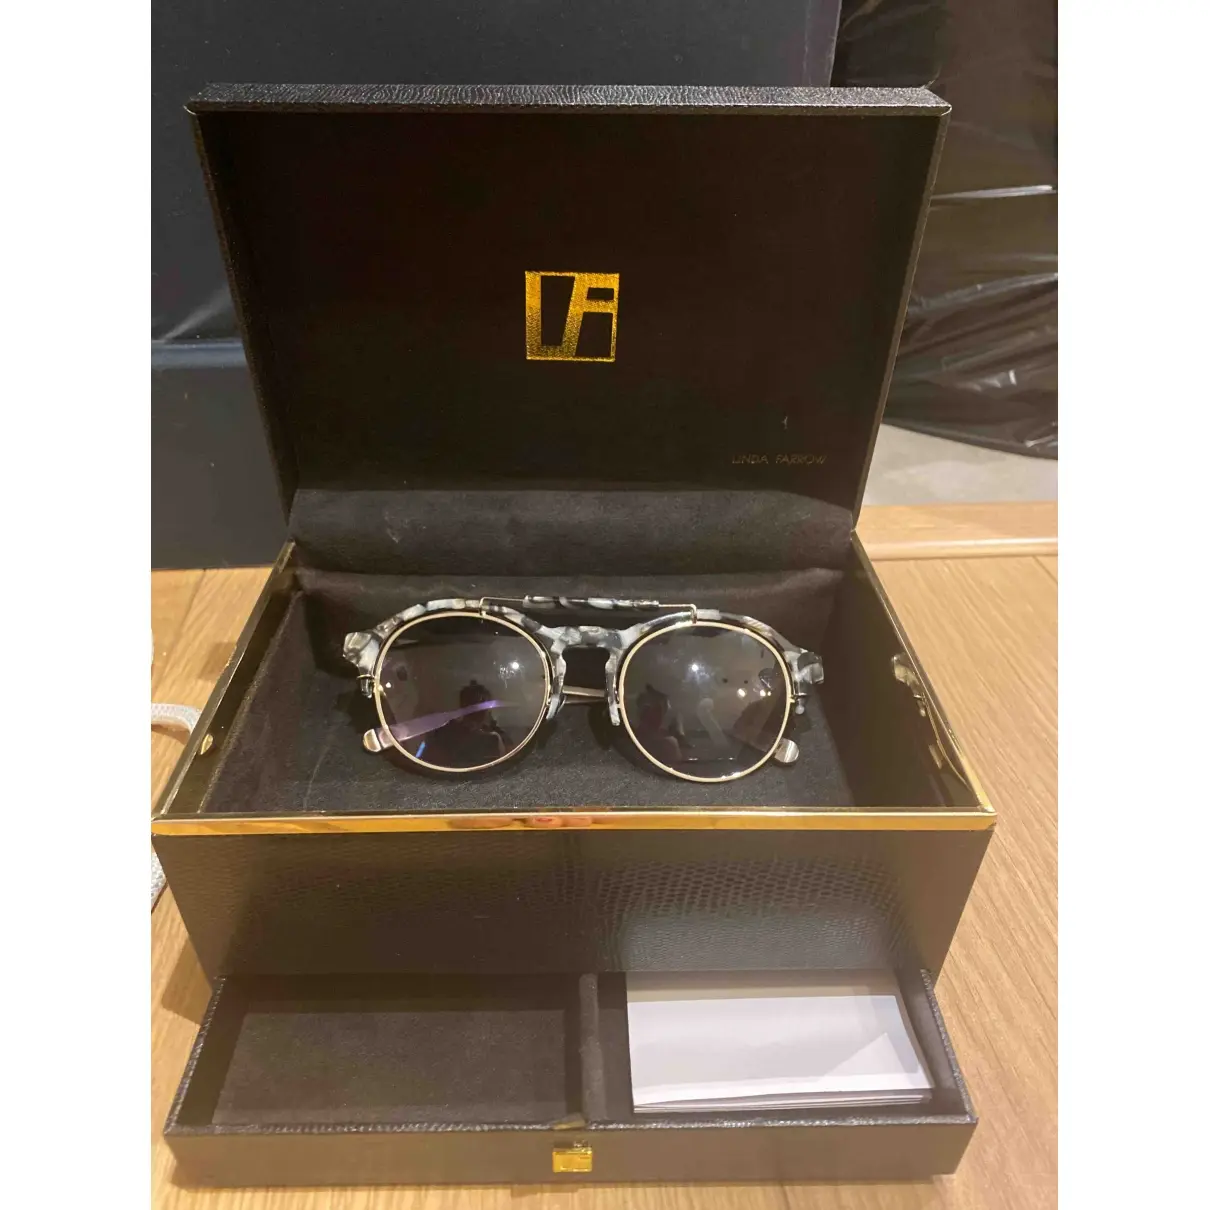 Buy Linda Farrow Aviator sunglasses online